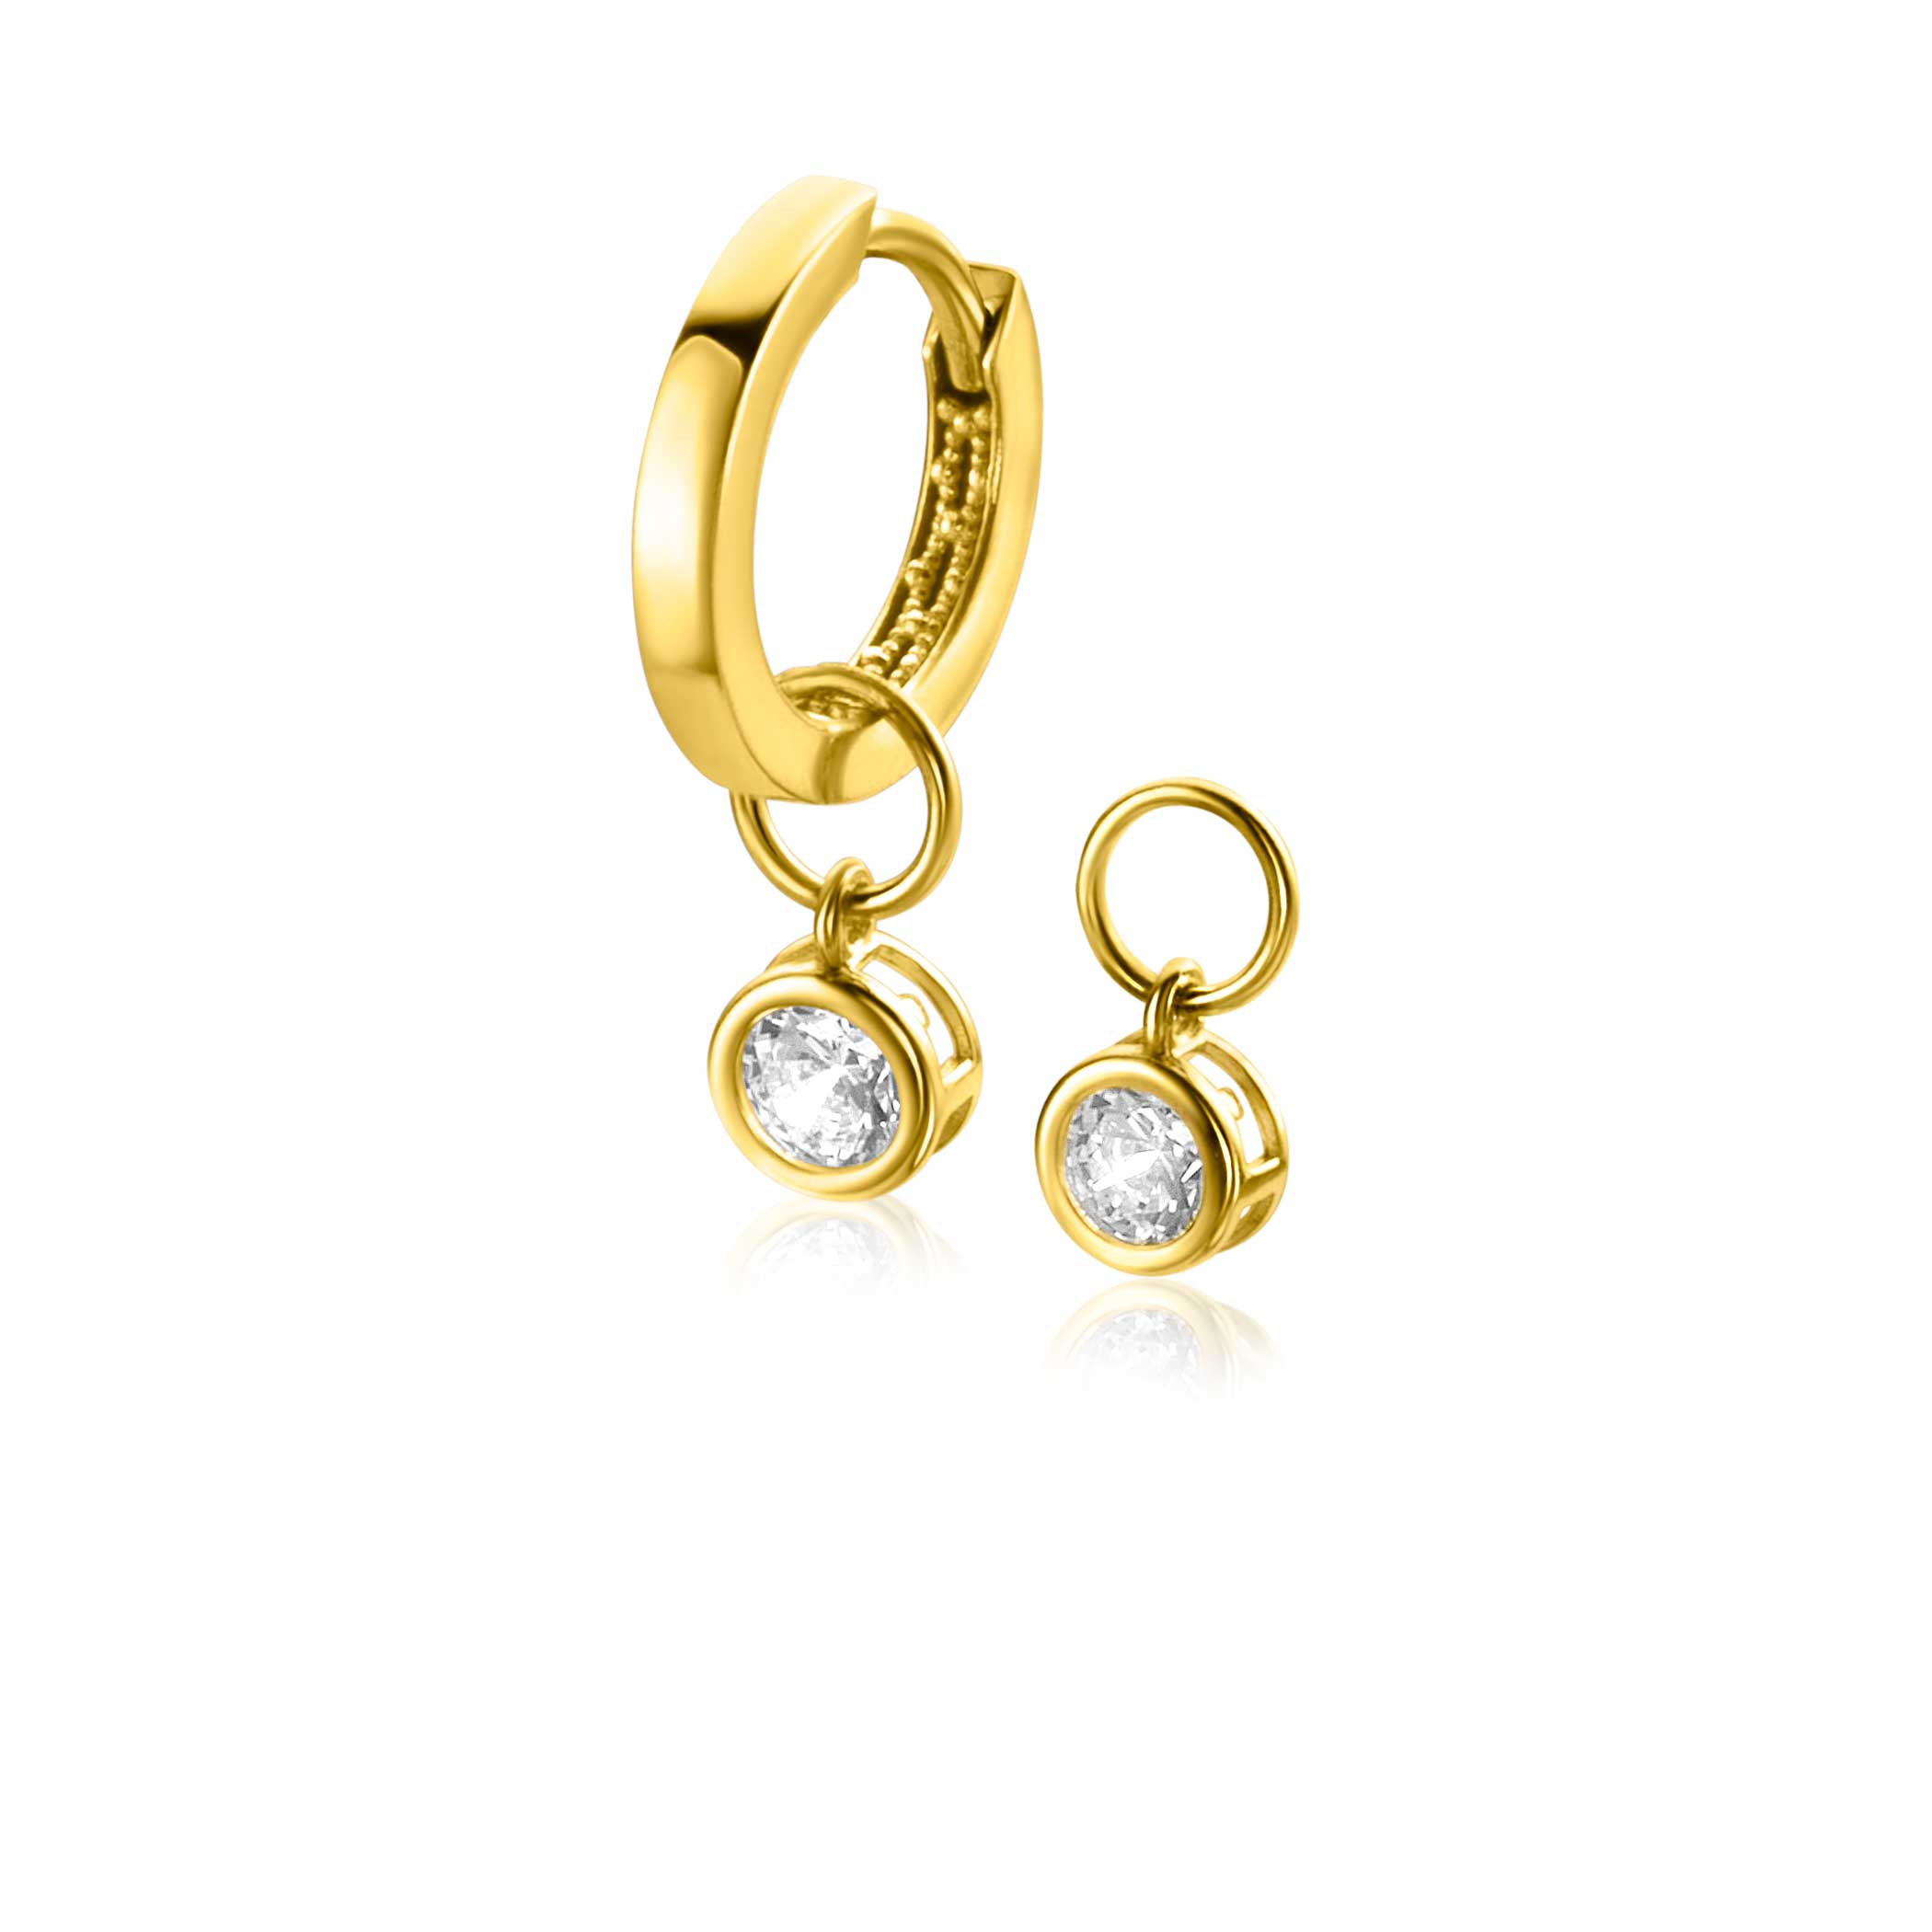 ZINZI 14K Gold Earrings Pendants Round White Zirconia 5mm ZGCH421 (excl. hoop earrings)